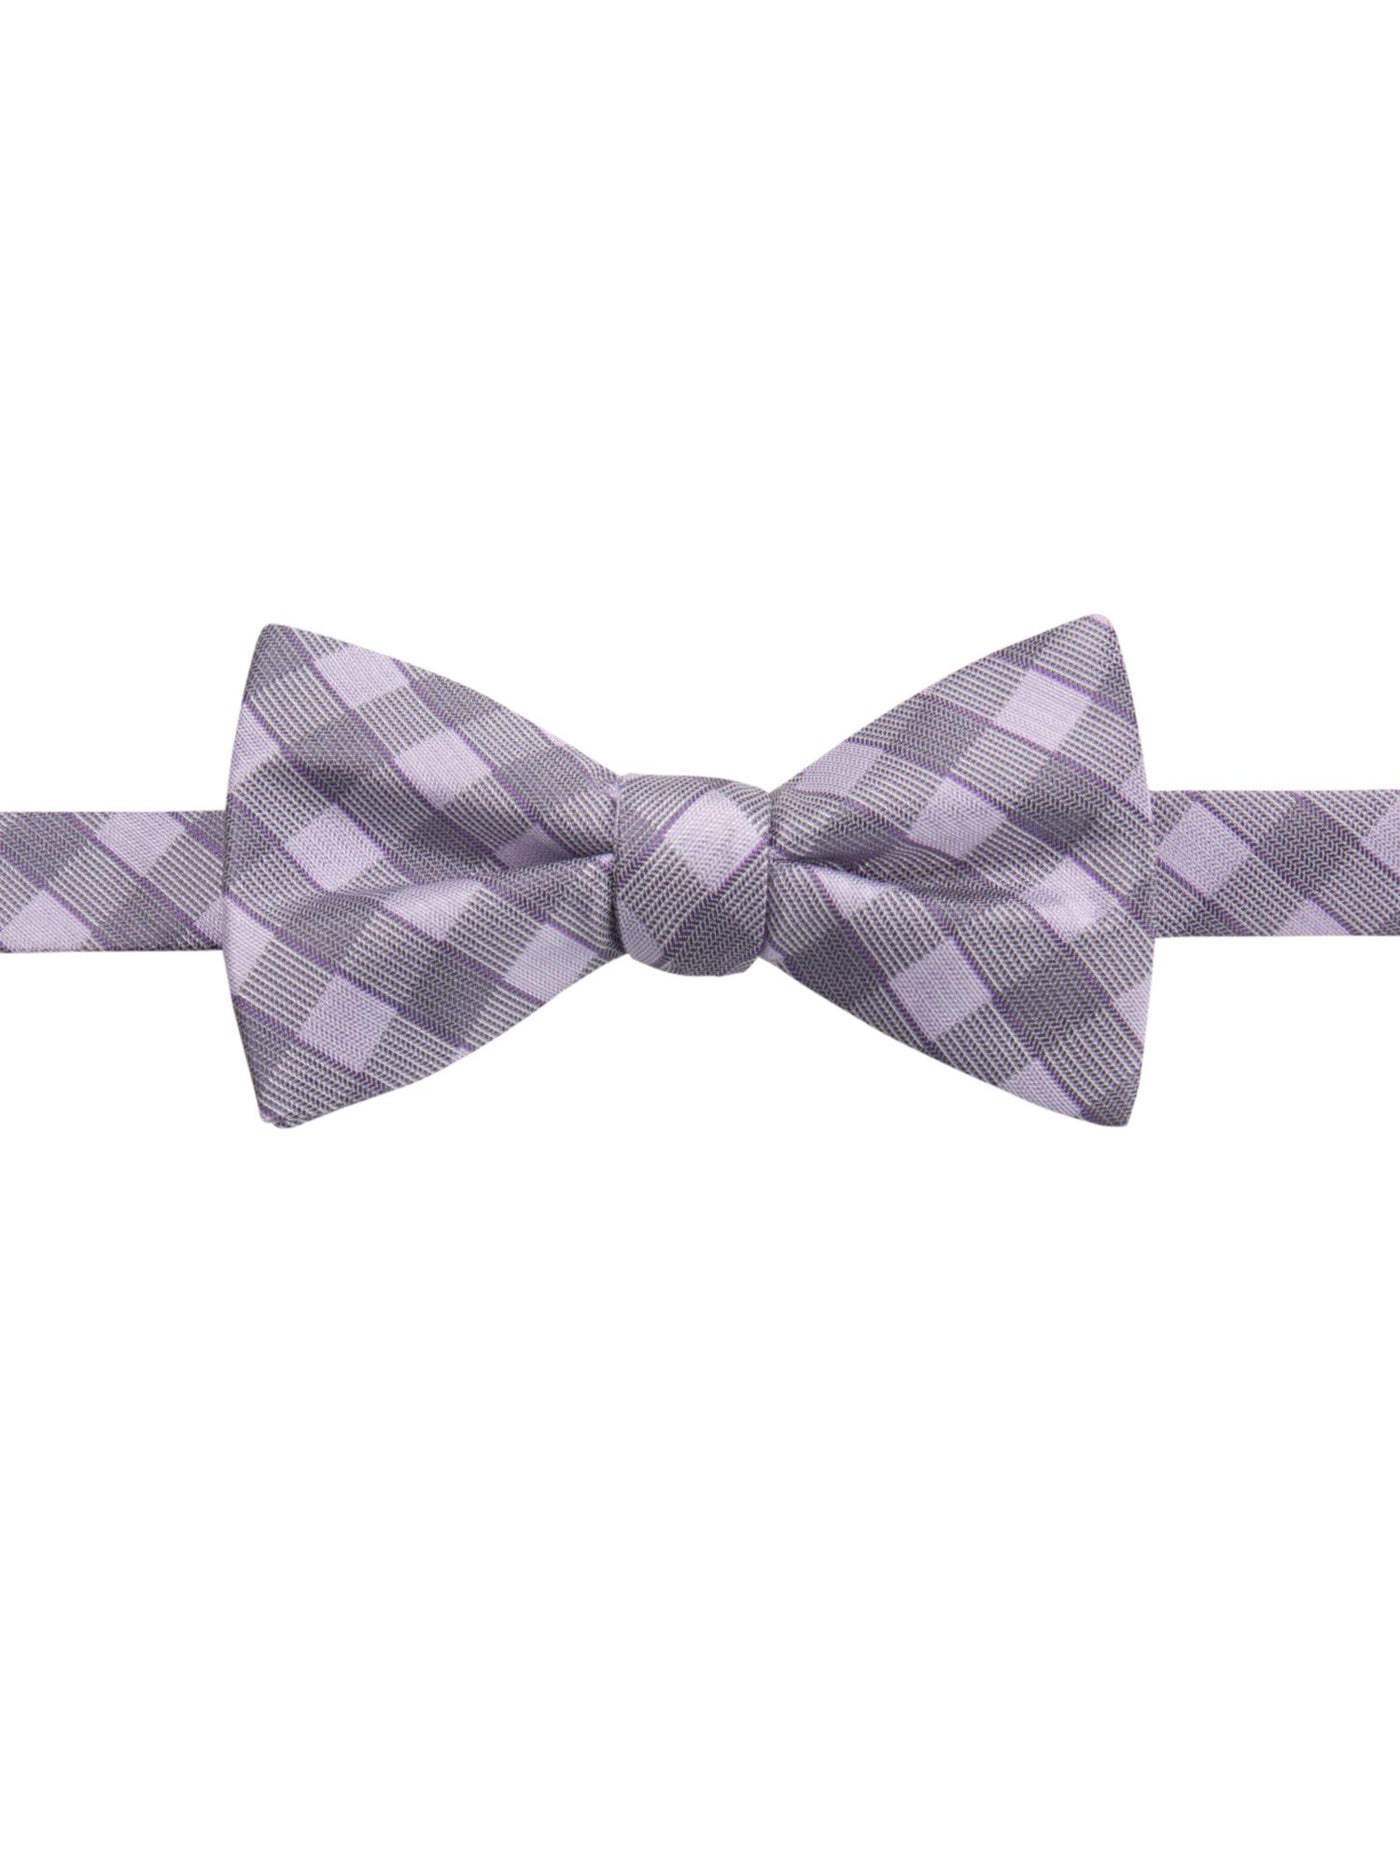 RYAN SEACREST Mens Purple Larkspur Plaid Pre-Tied Bow Tie